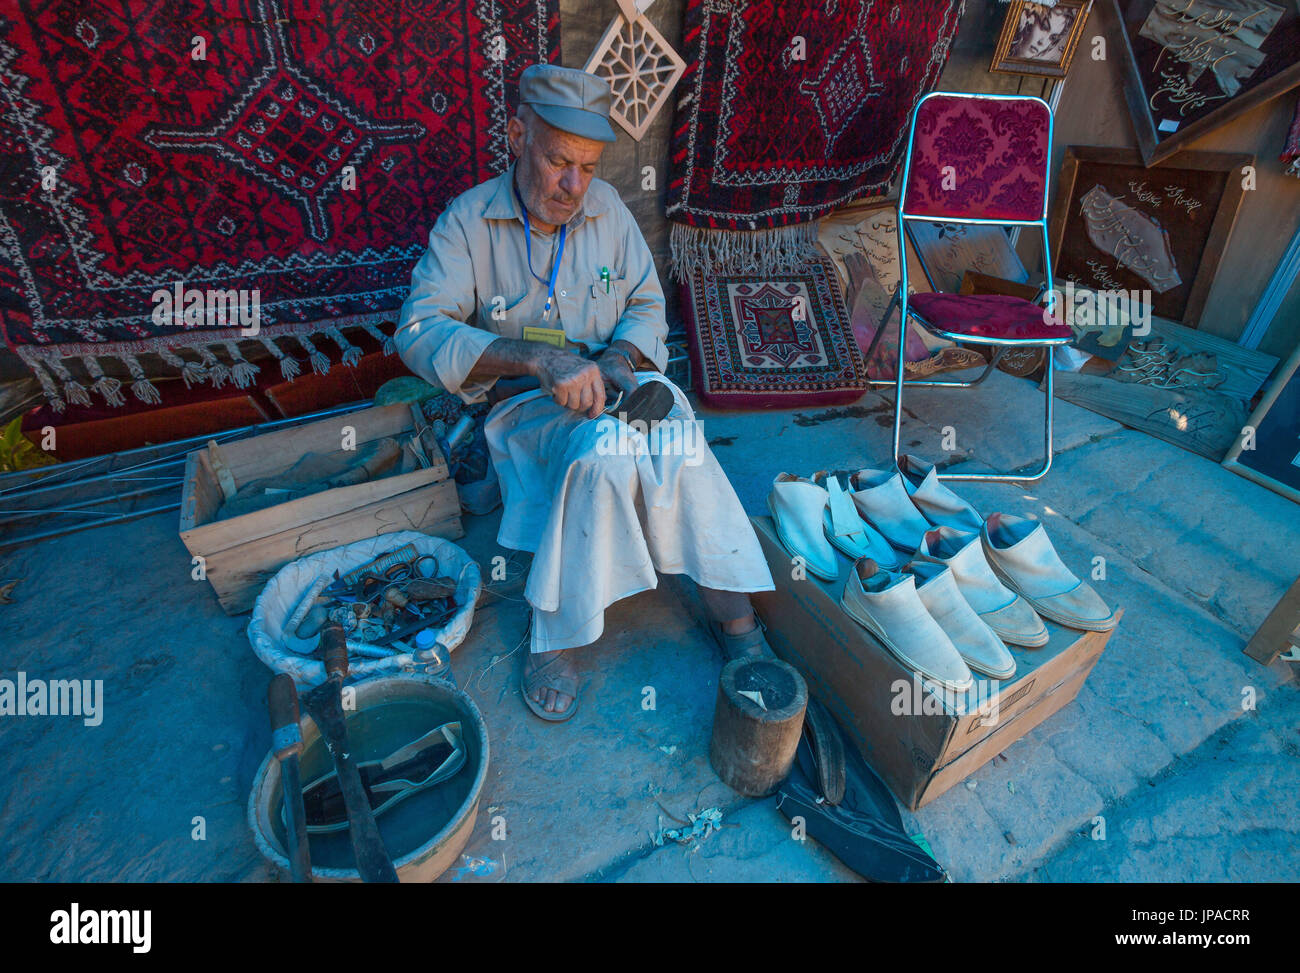 Iran, Shiraz City, Arg-e Karim Khan Citadel, inside the citadel, shoe maker Stock Photo